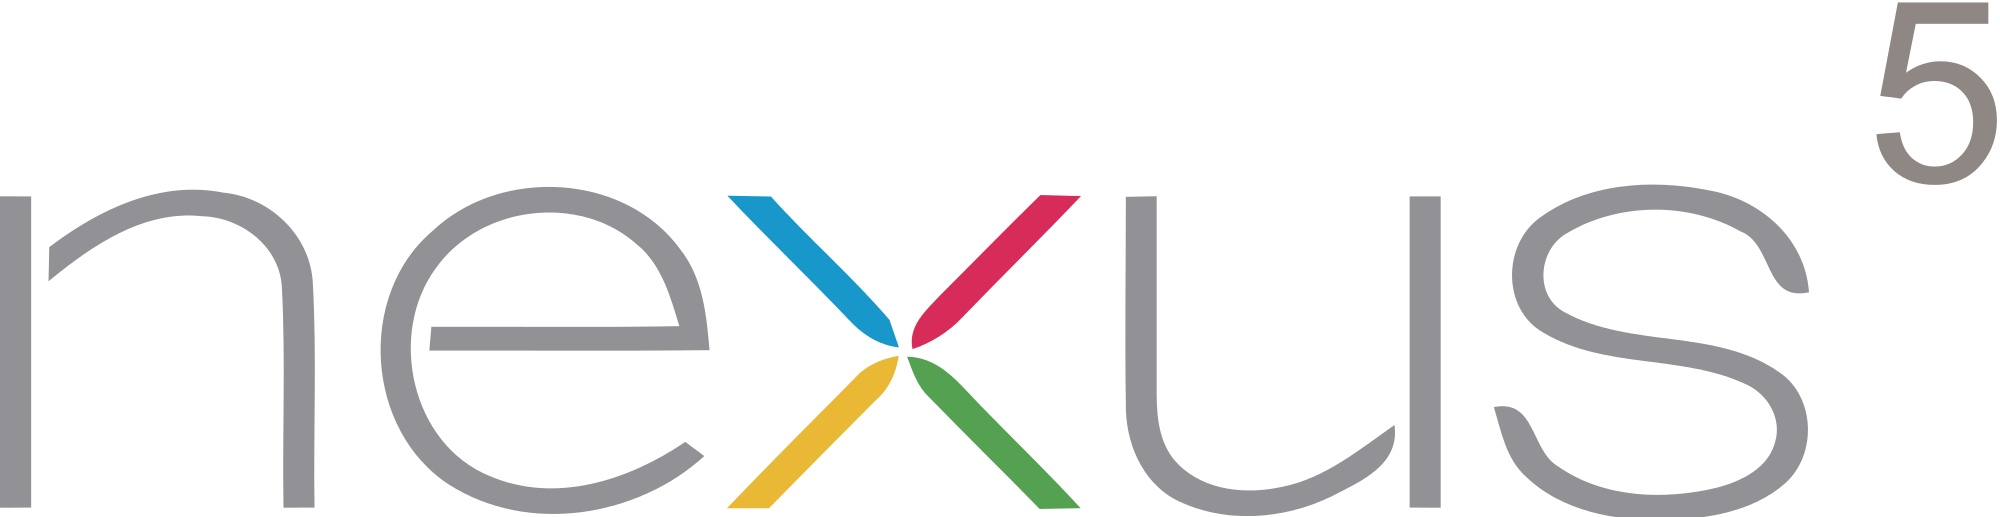 Nexus 5 Logo - File:Nexus5.svg - Wikimedia Commons